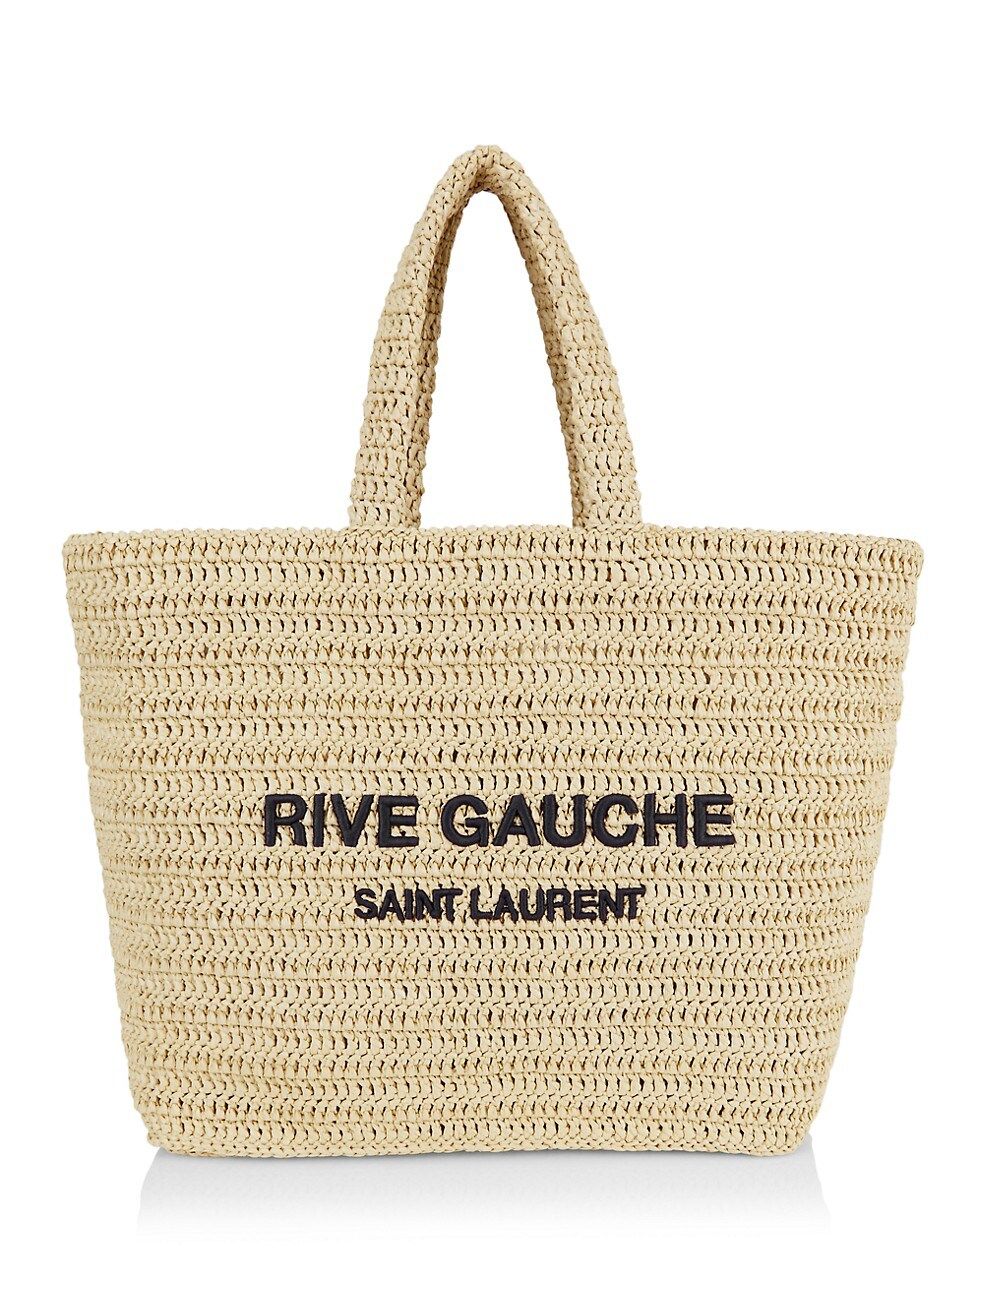 Saint Laurent Rive Gauche Raffia Crochet Bag | Saks Fifth Avenue